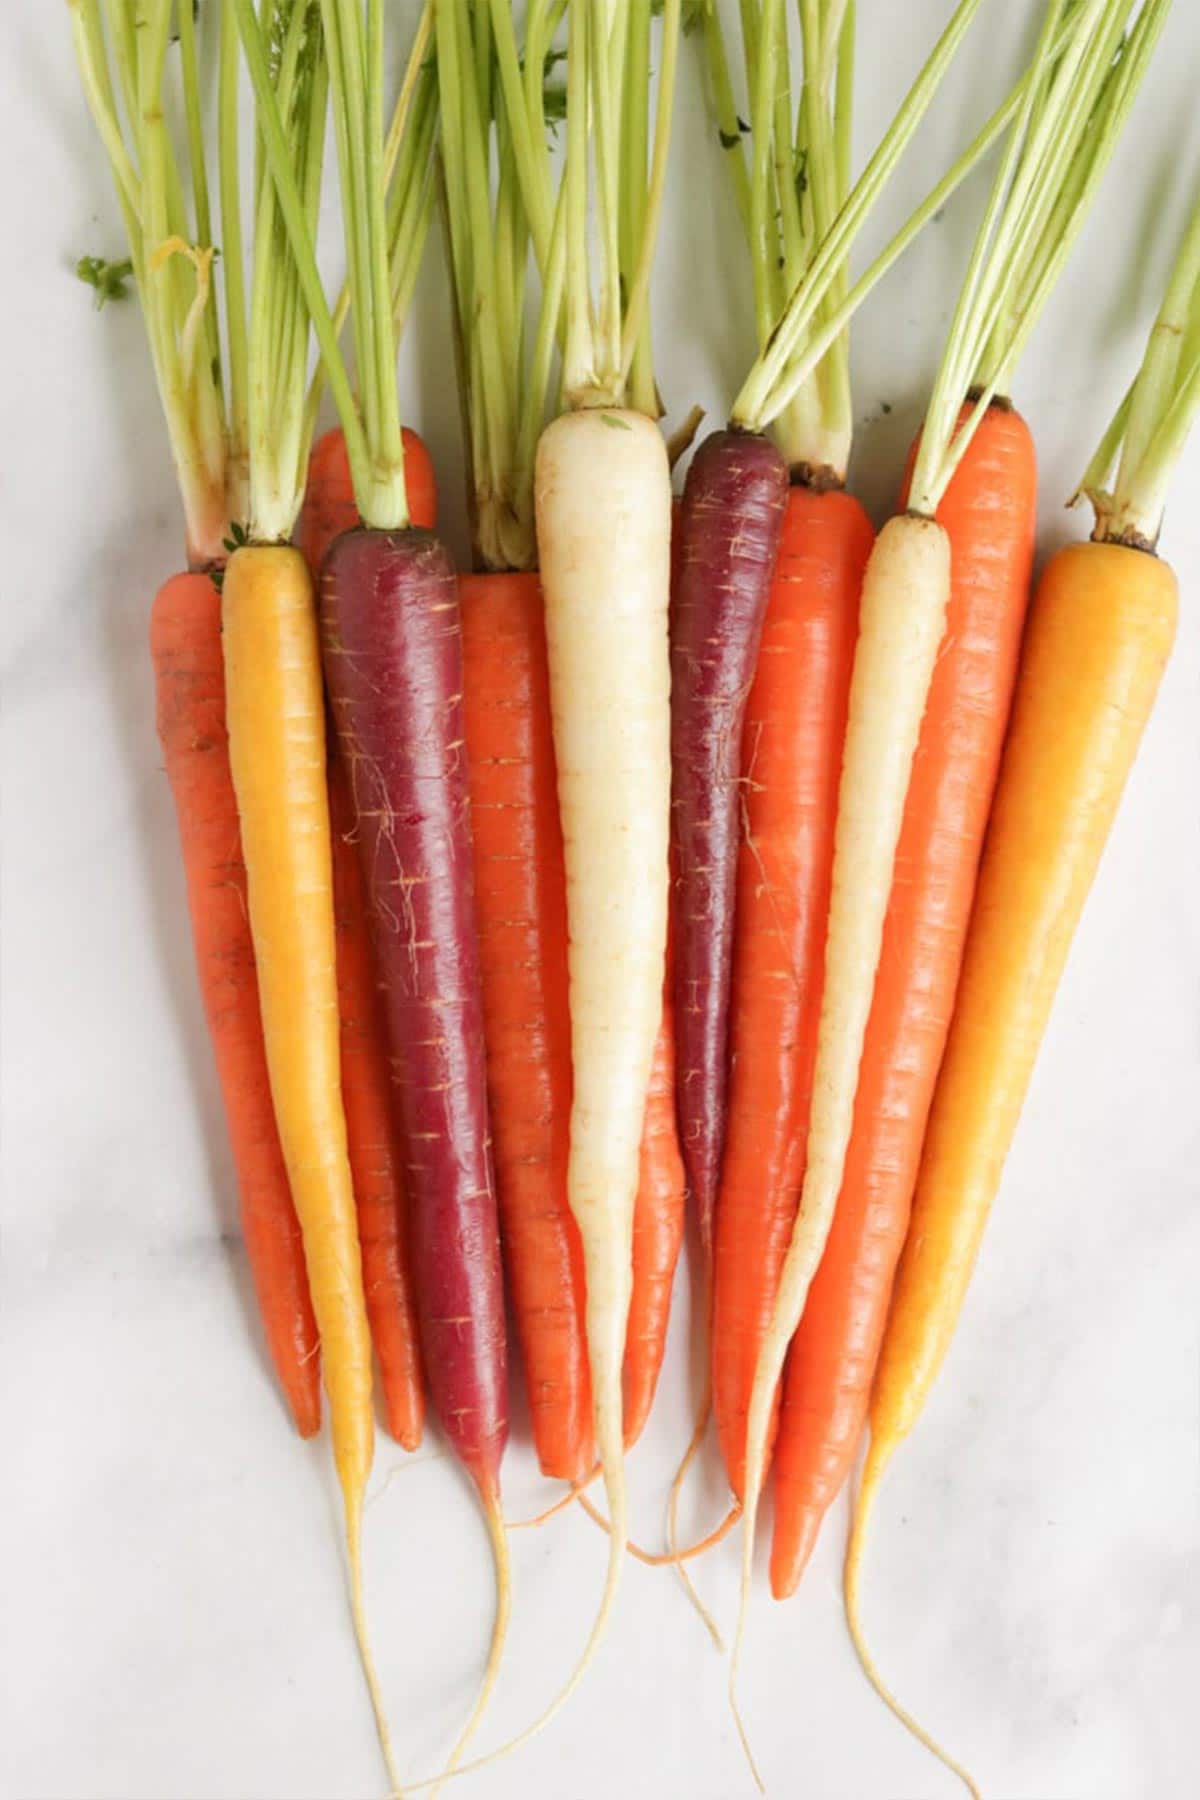 Whole Roasted Rainbow Carrots- A bunch of raw rainbow carrots on a marble backdrop.